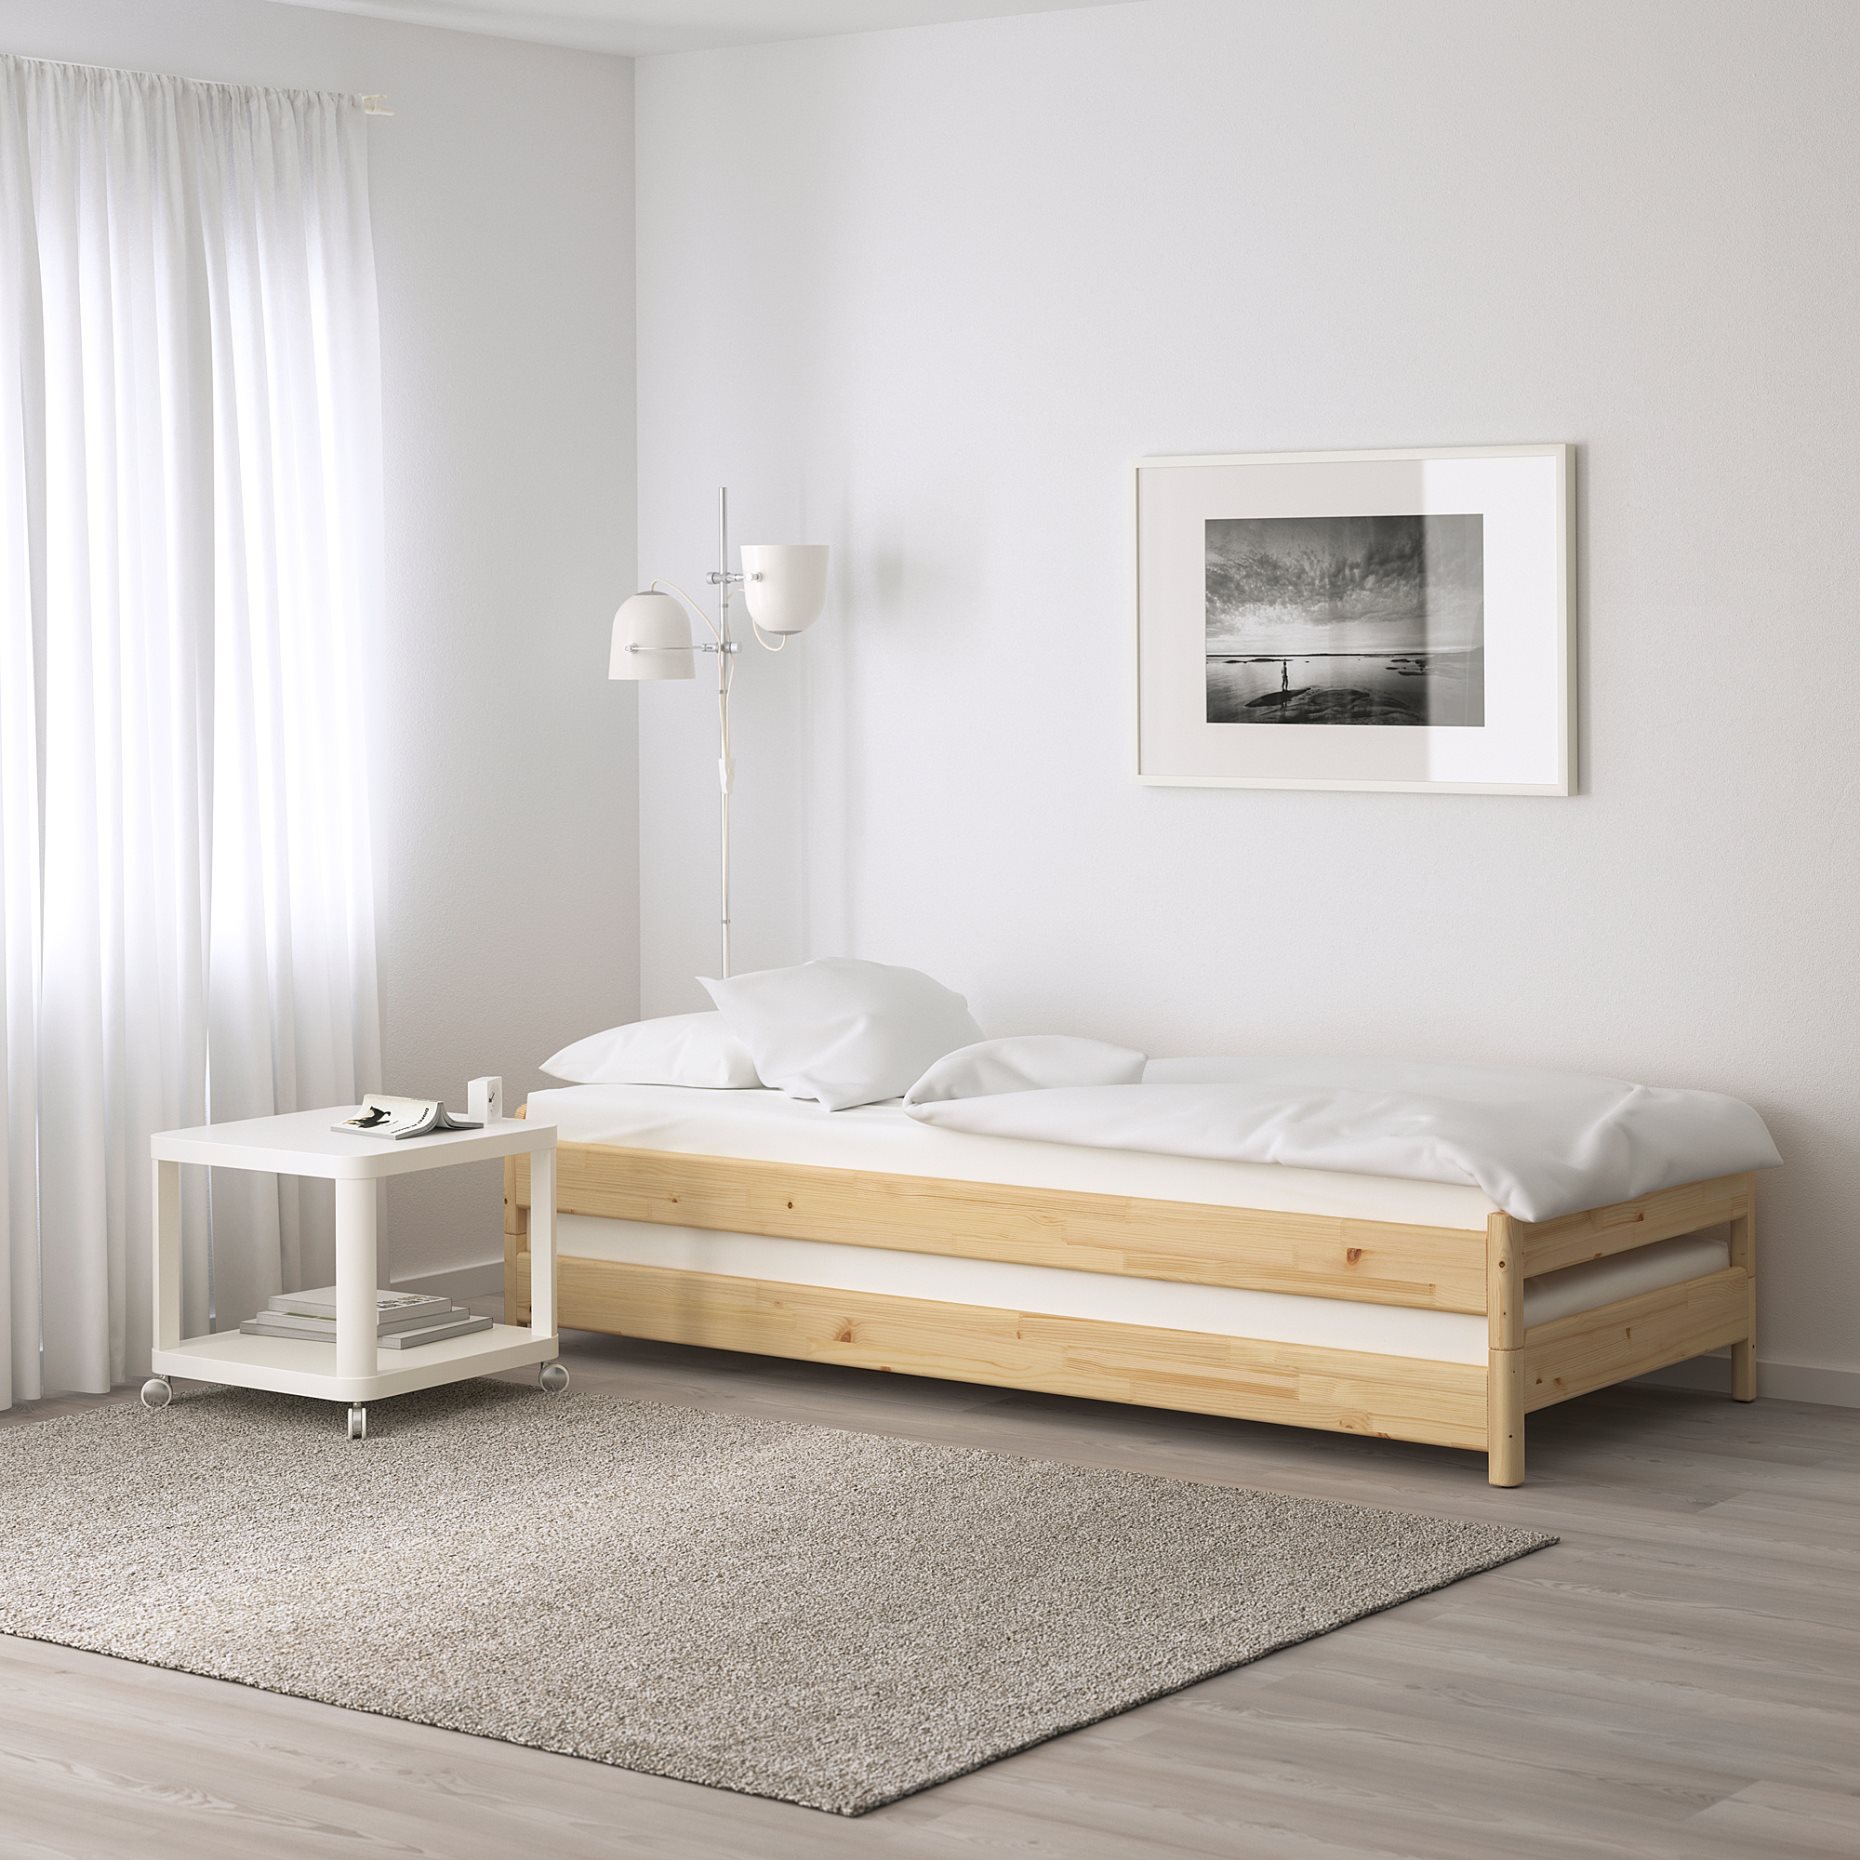 ÅFJÄLL, foam mattress/medium firm, 80x200 cm, 305.686.42